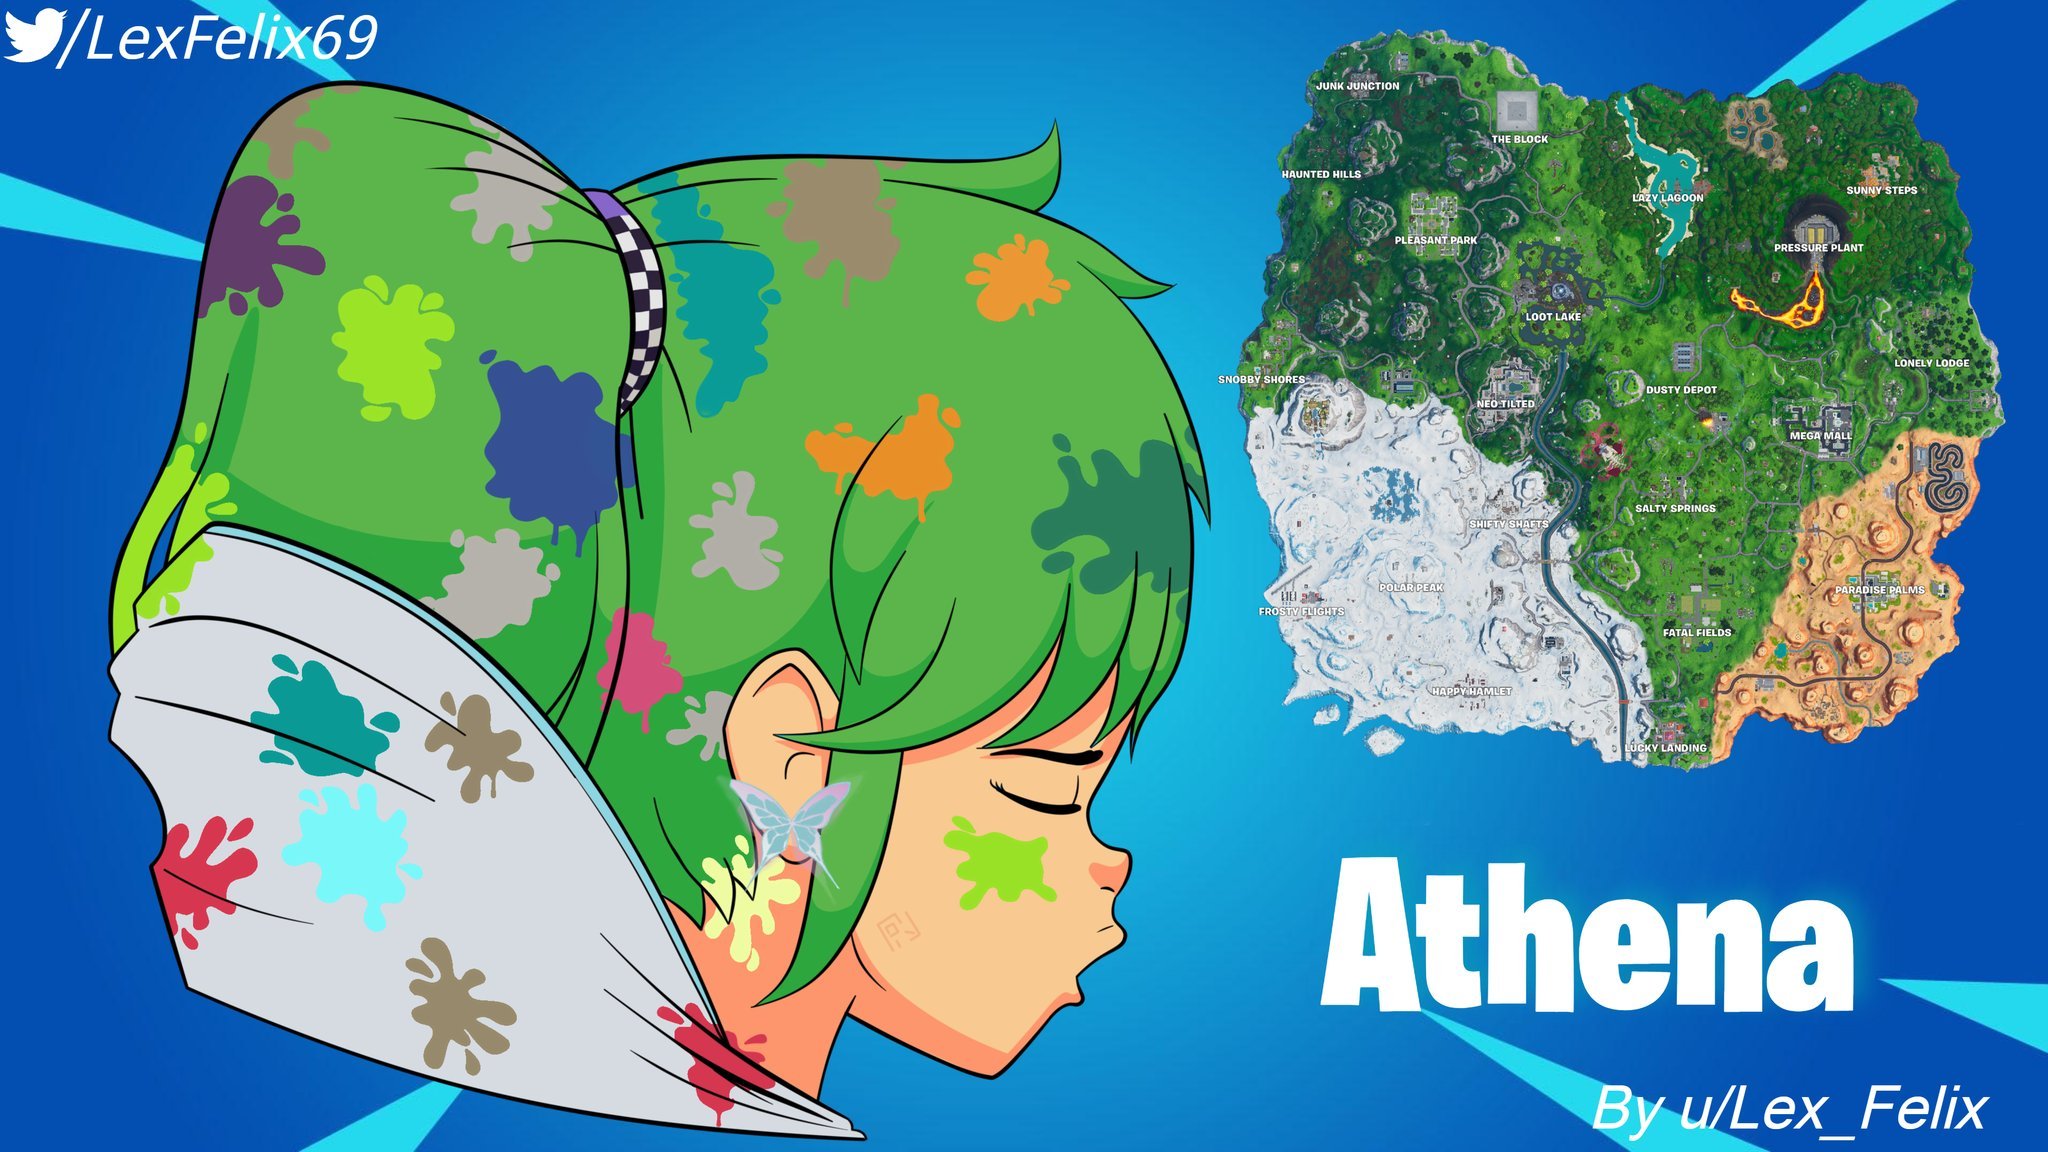 Spookyfly Fortnite Leaks News On Twitter Athena Season X Map As A Character Via Lexfelix69 Fortnite - plane crazy roblox thatsplanecrazy twitter